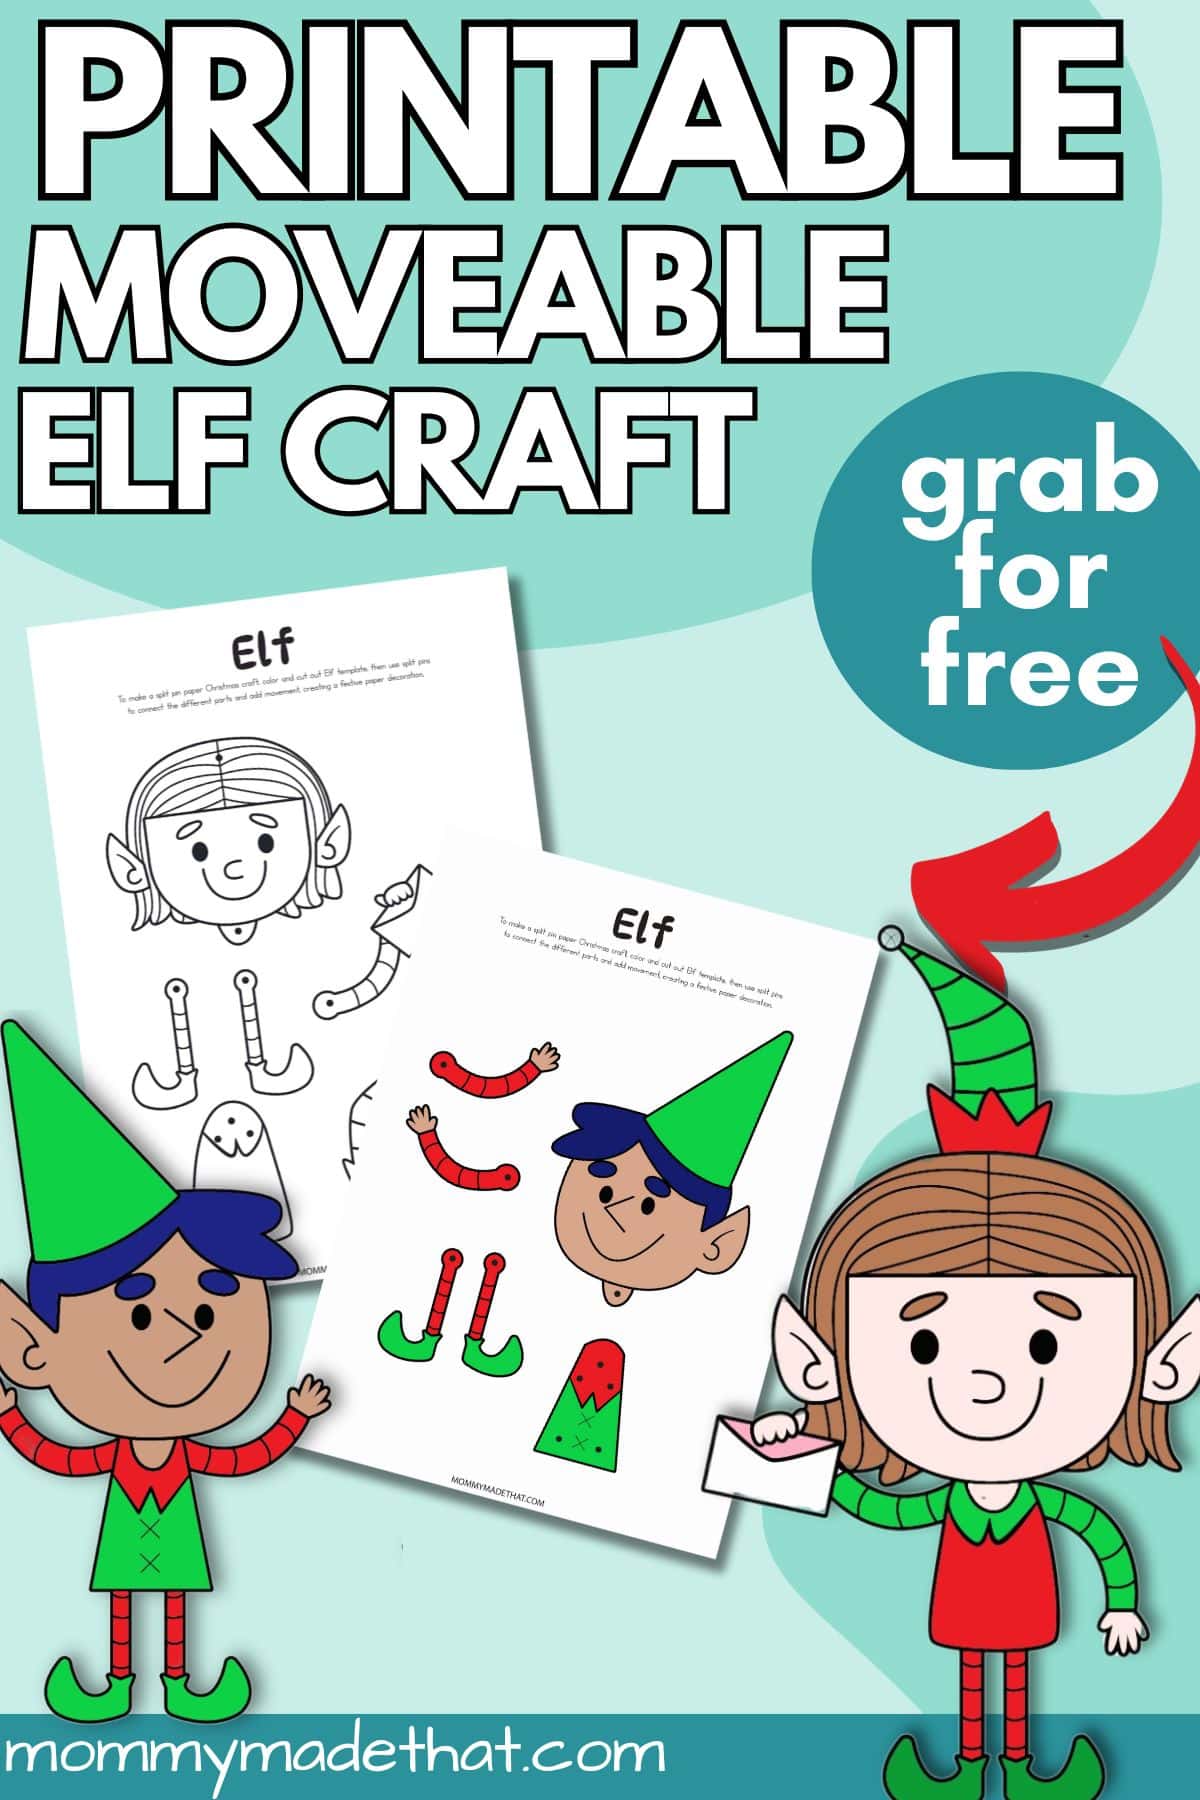 Free printable elf craft using split pins.